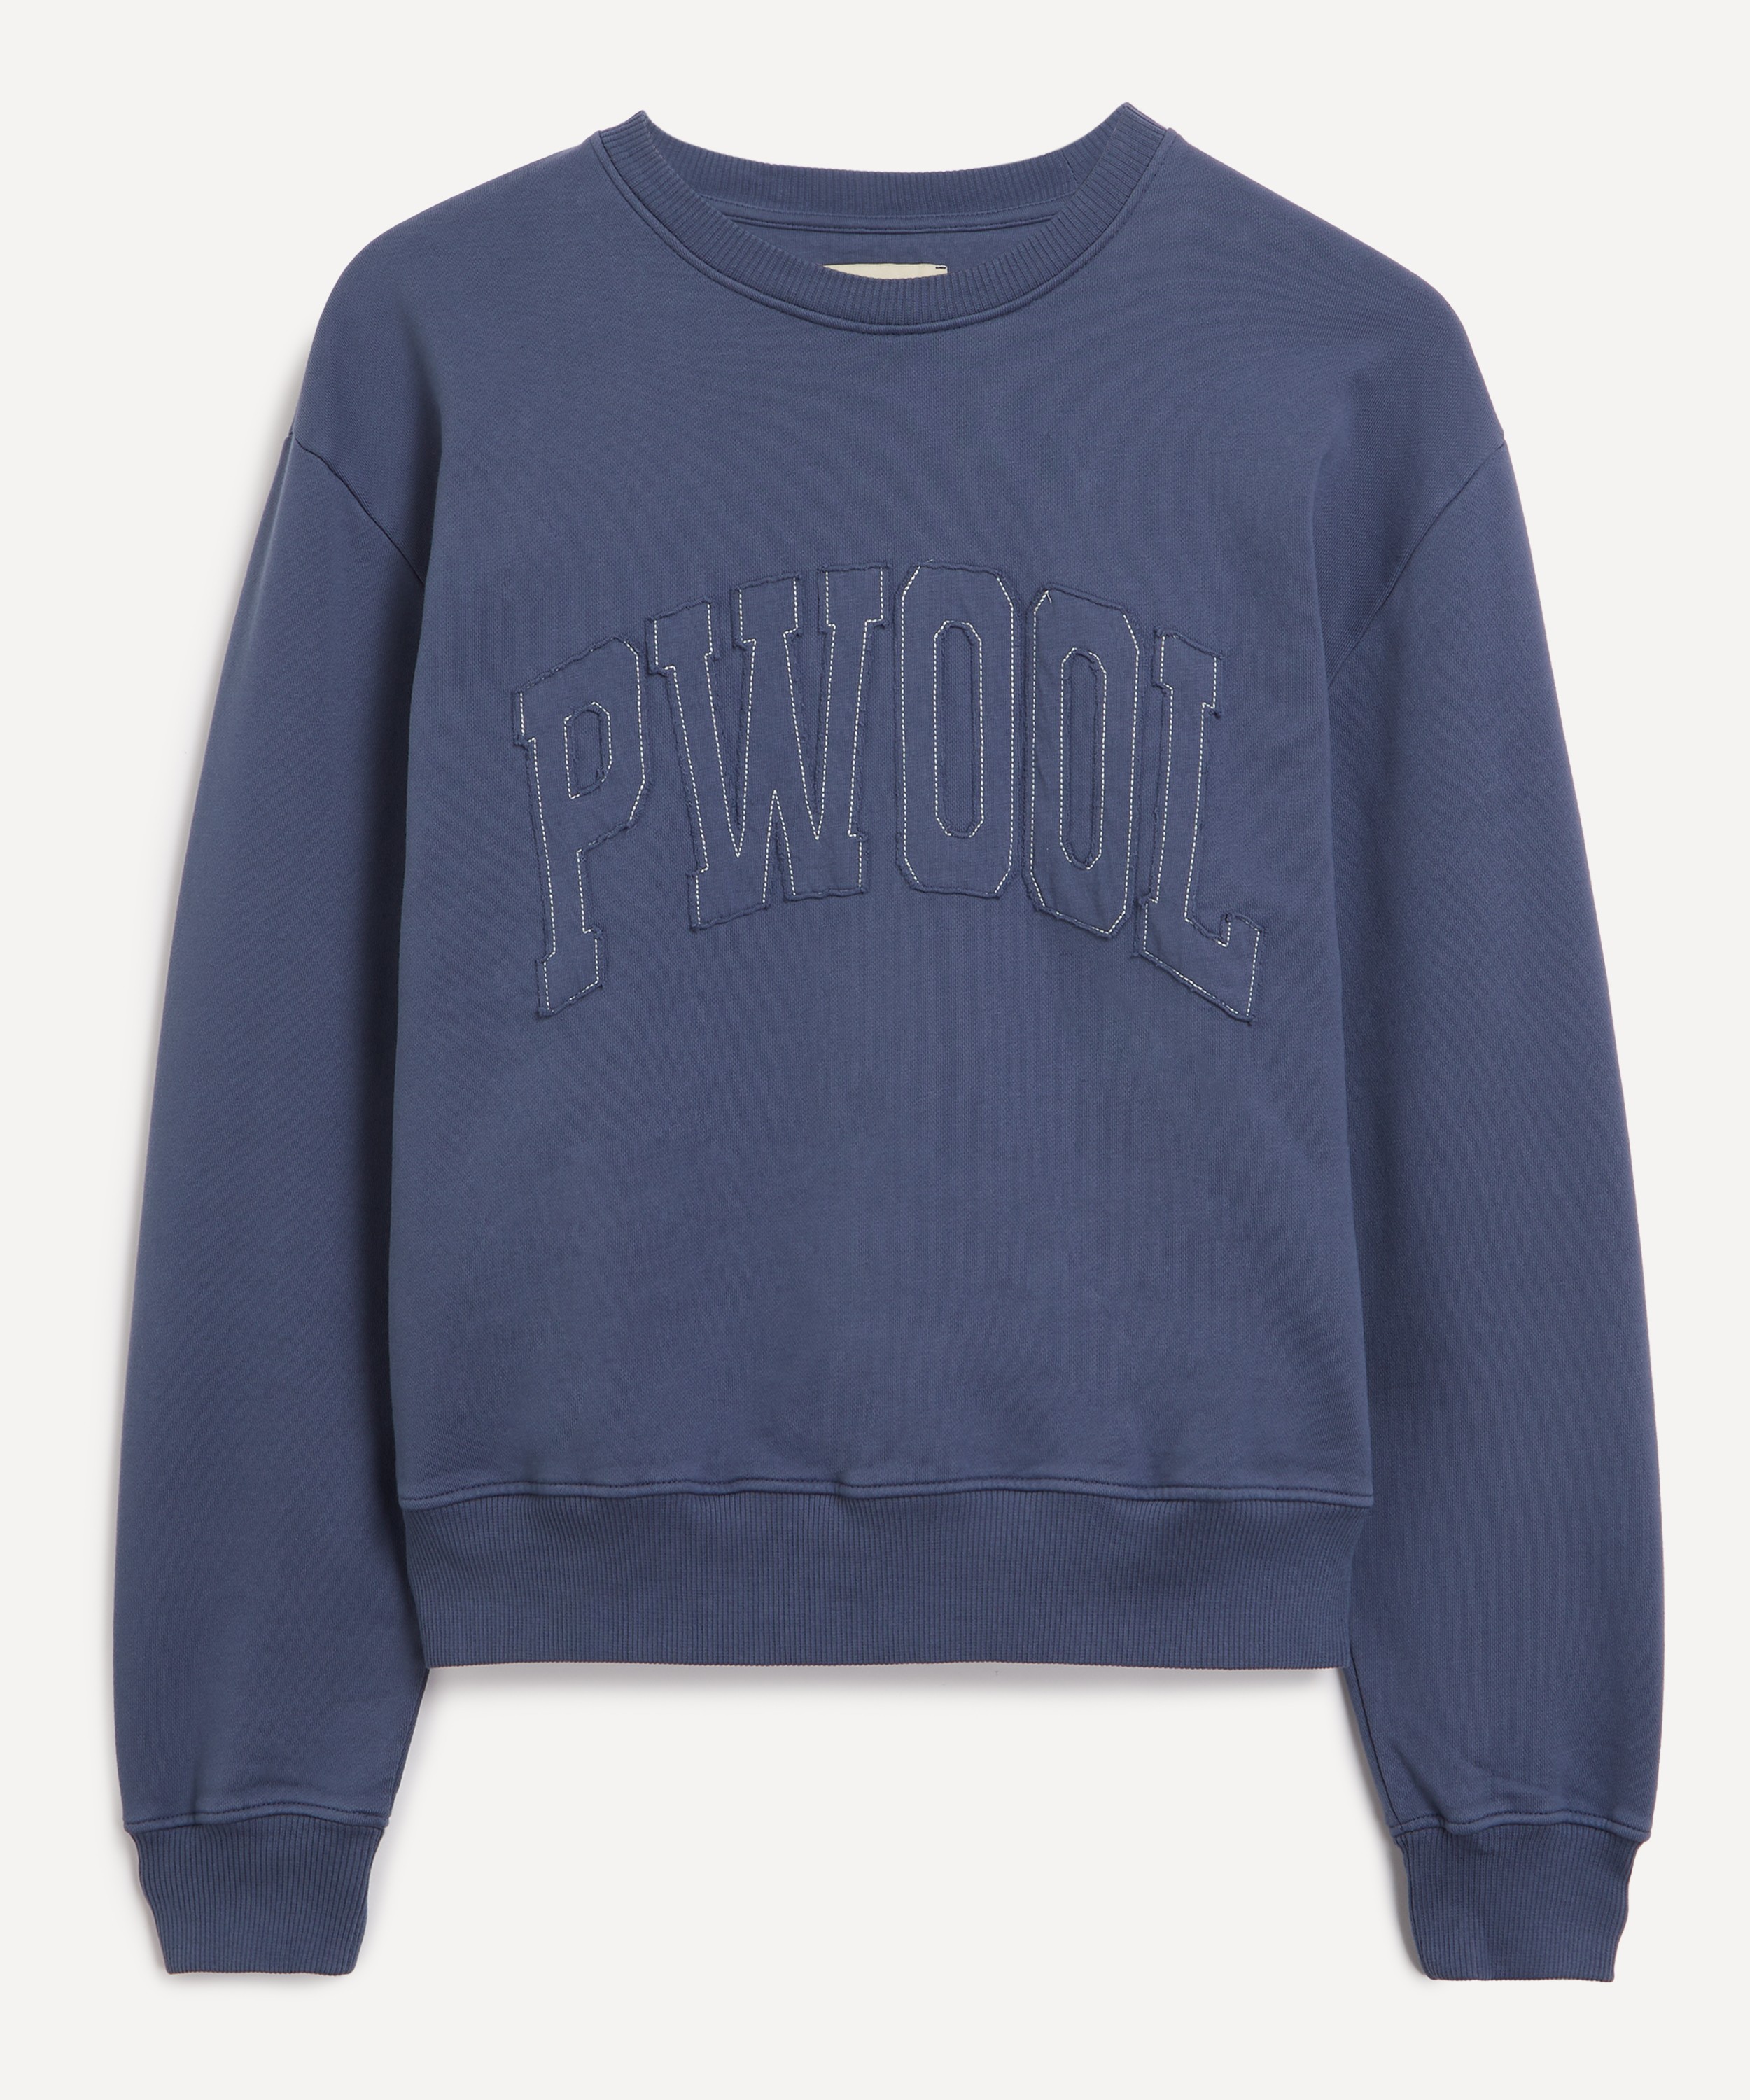 Paloma Wool - PWOOL Sweatshirt